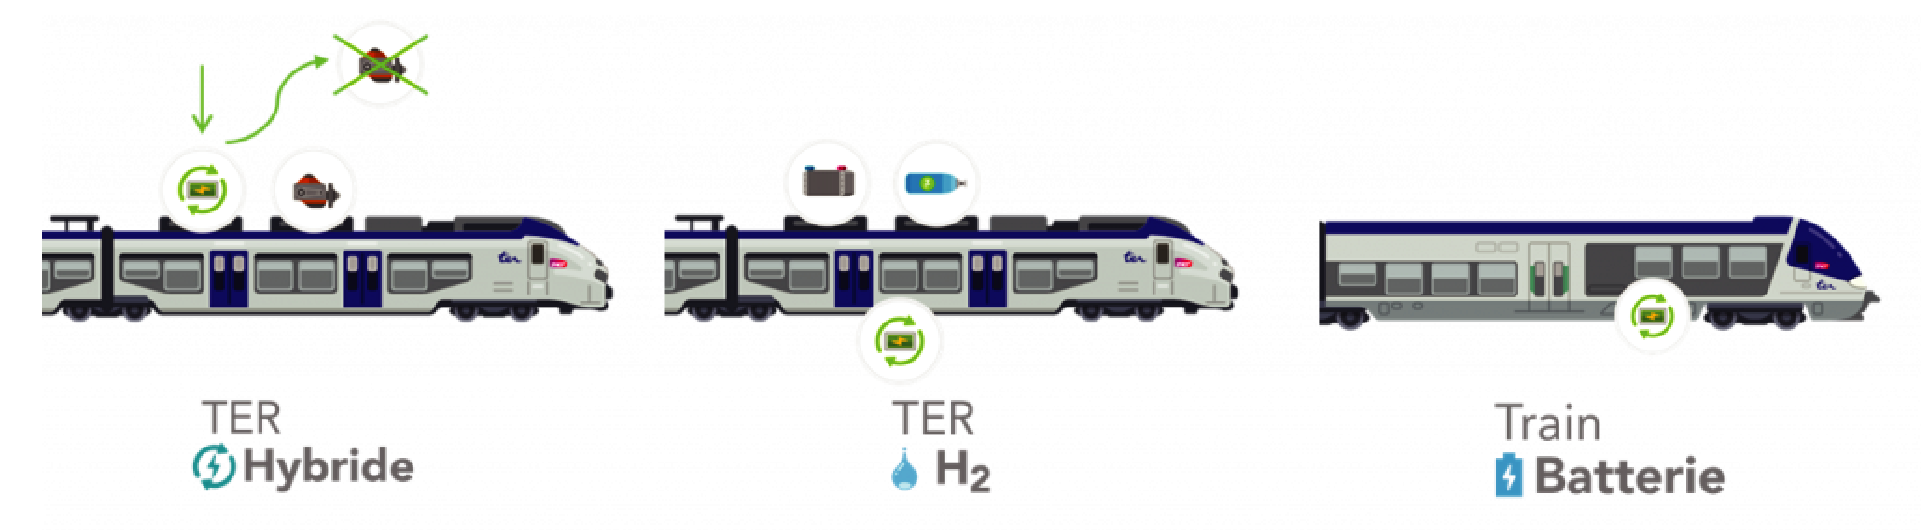 simulation train hydrogène